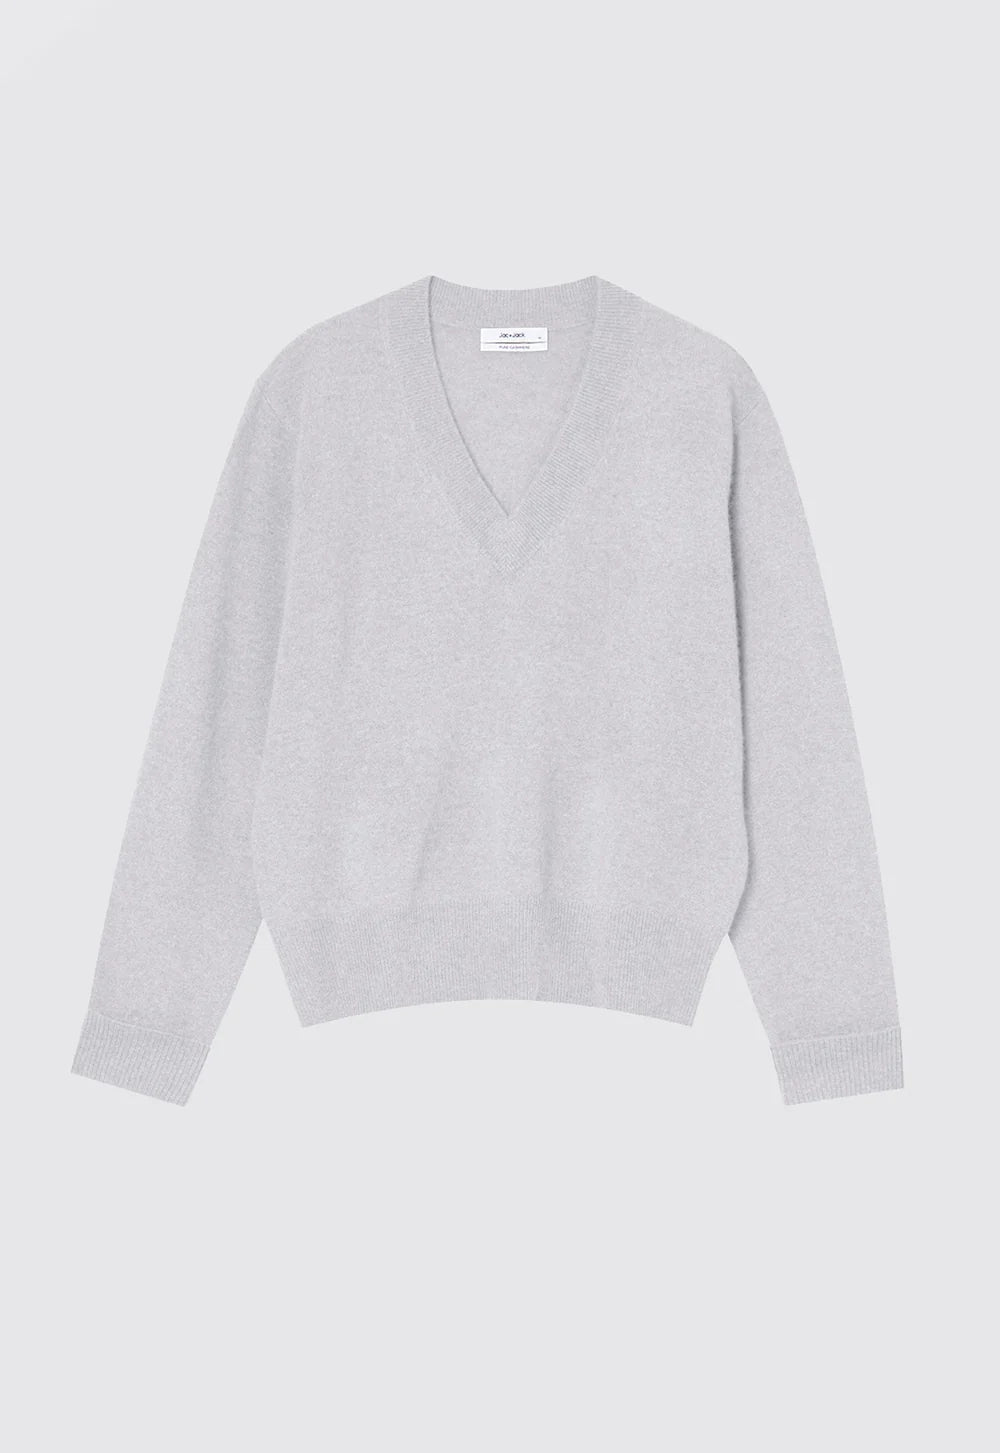 Jac + Jack Sharpo Cashmere Sweater - Pale Grey Marle